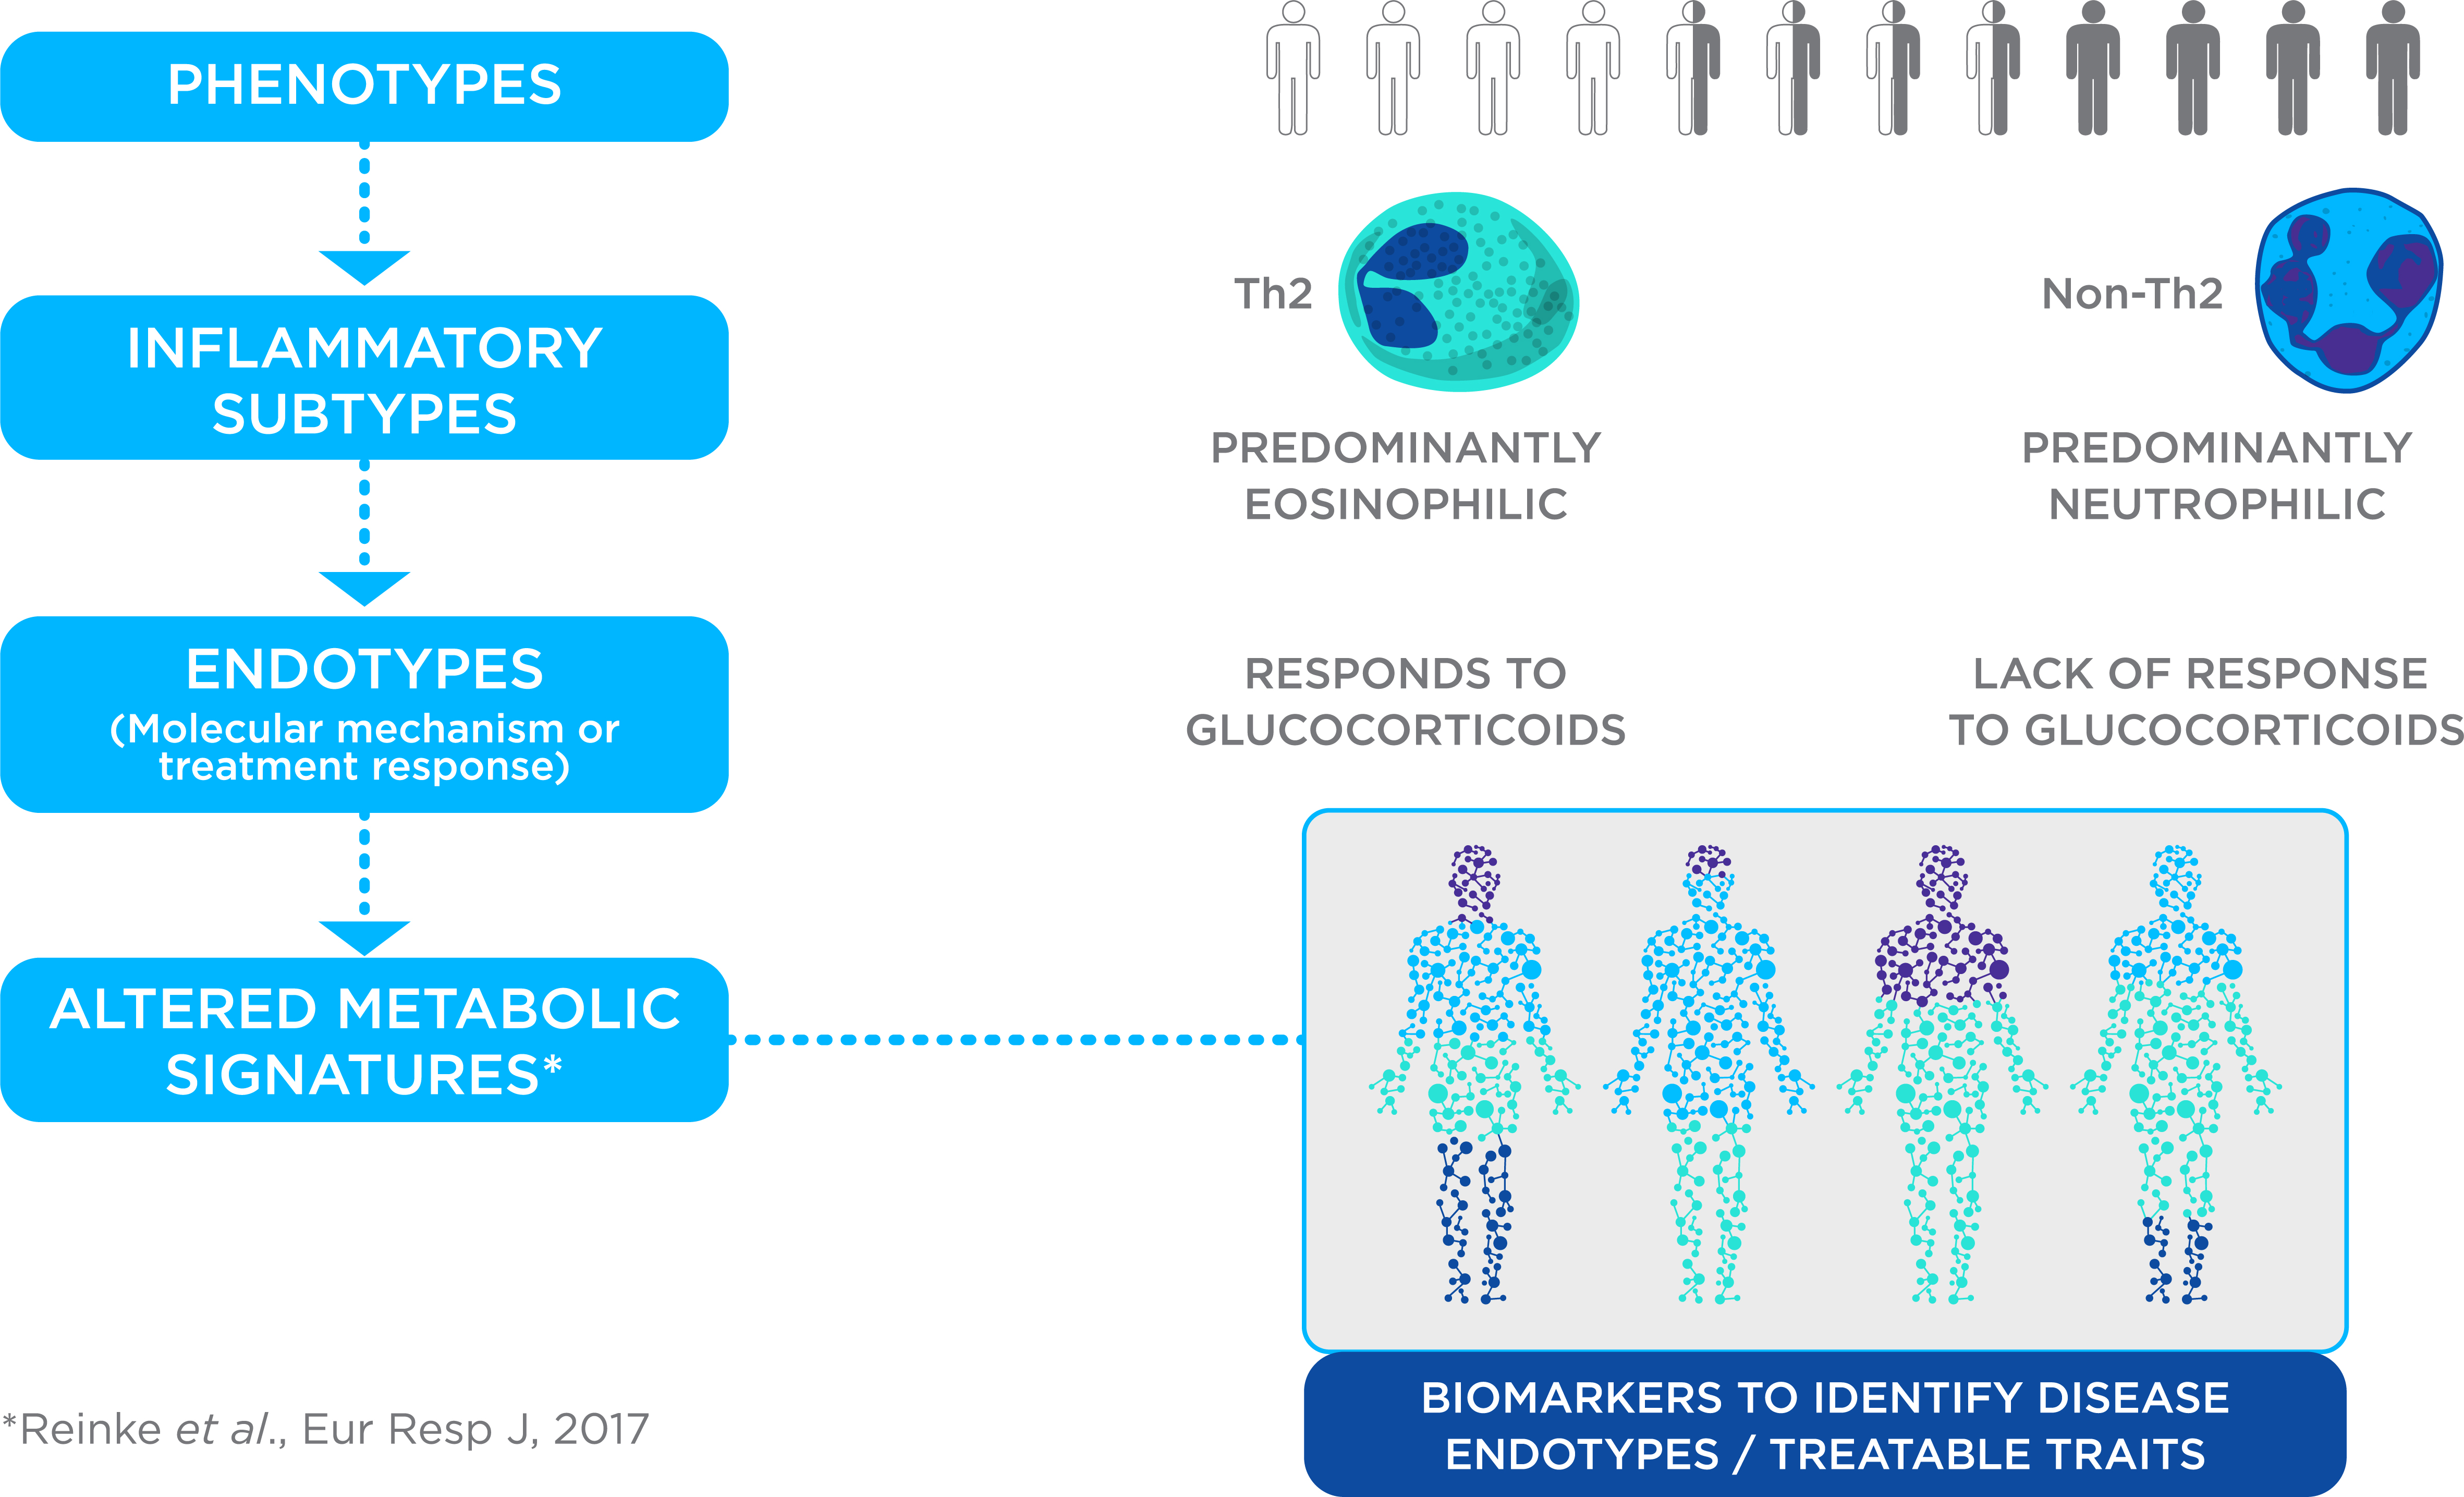 VOC biomarkers in Inflammatory Disease